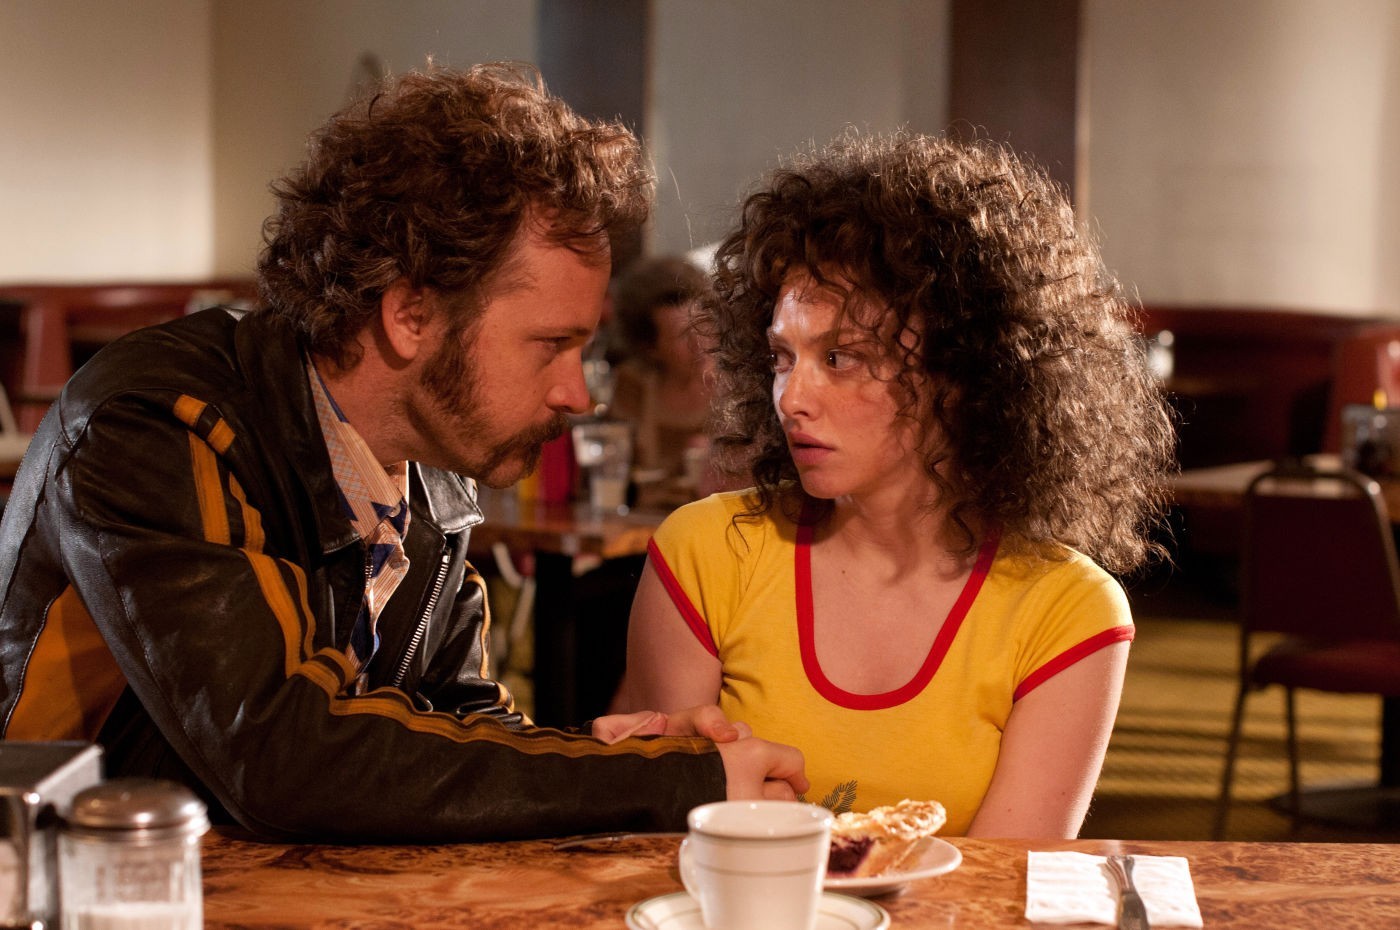 Peter Sarsgaard stars as Chuck Traynor and Amanda Seyfried stars as Linda Lovelace in Radius TWC's Lovelace (2013)